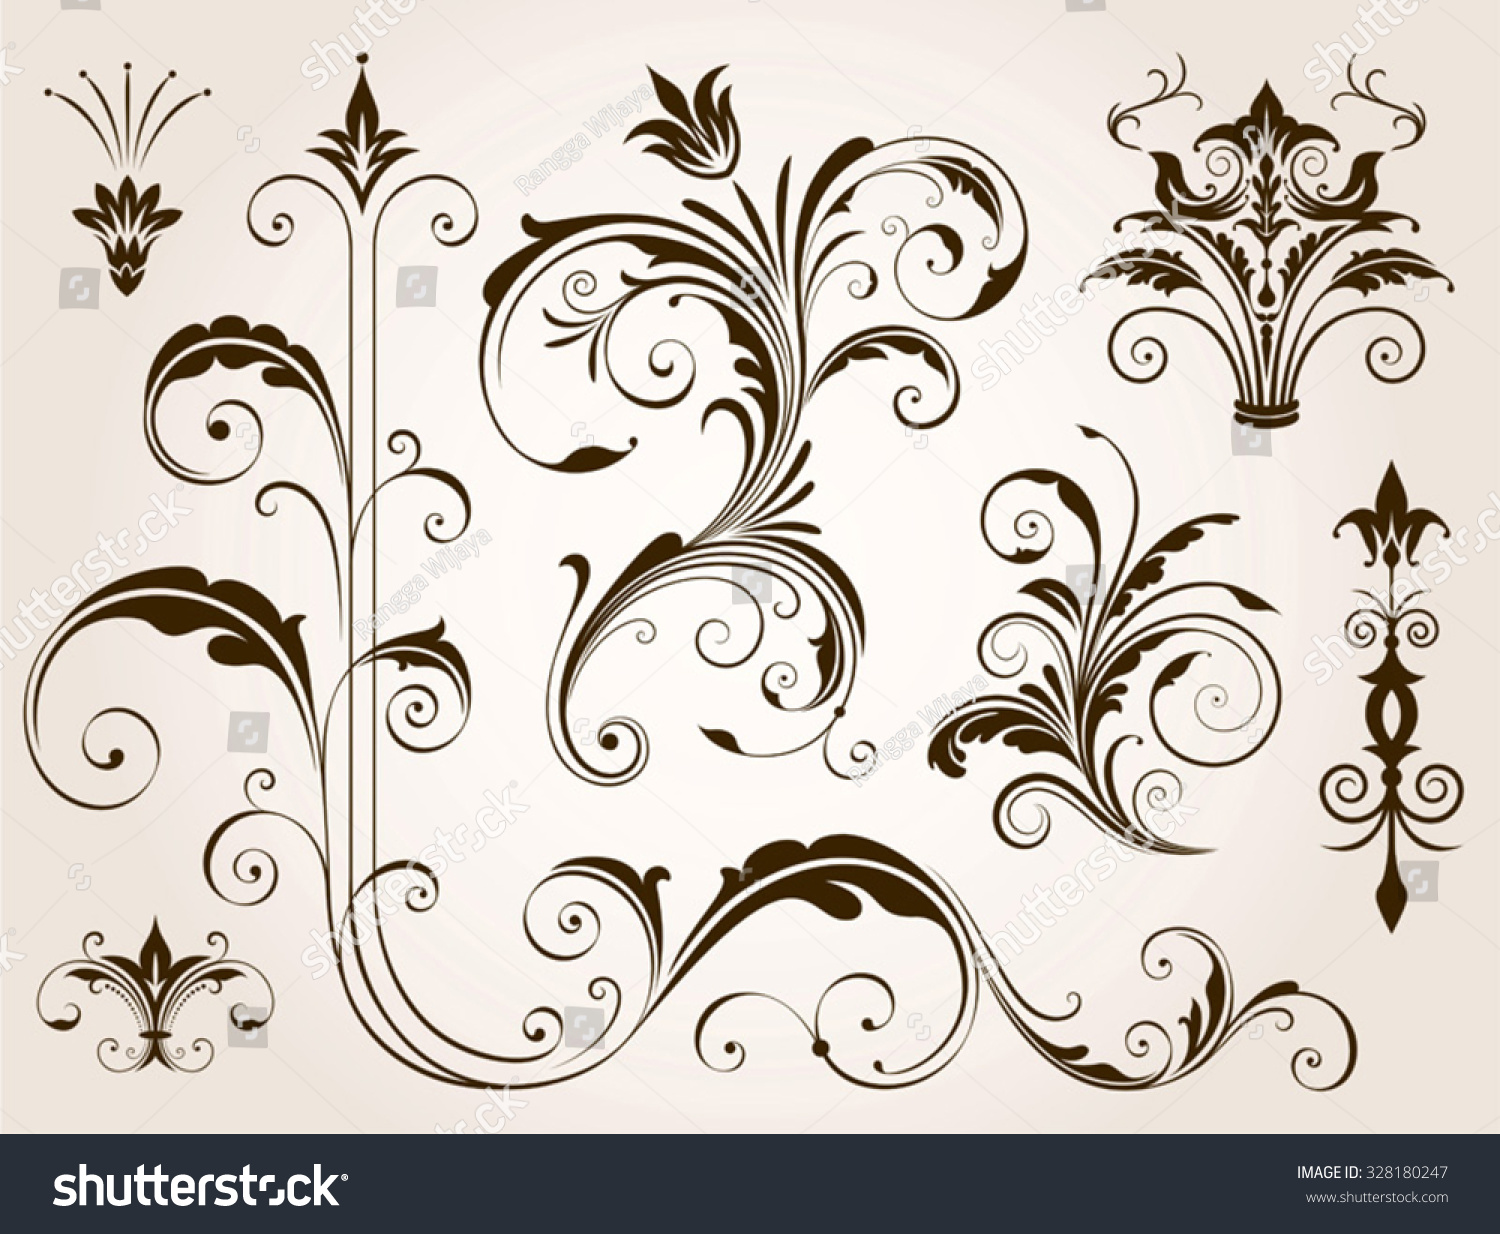 Various Ornate Scroll Design Elements Vector Illustration. Saved In Eps